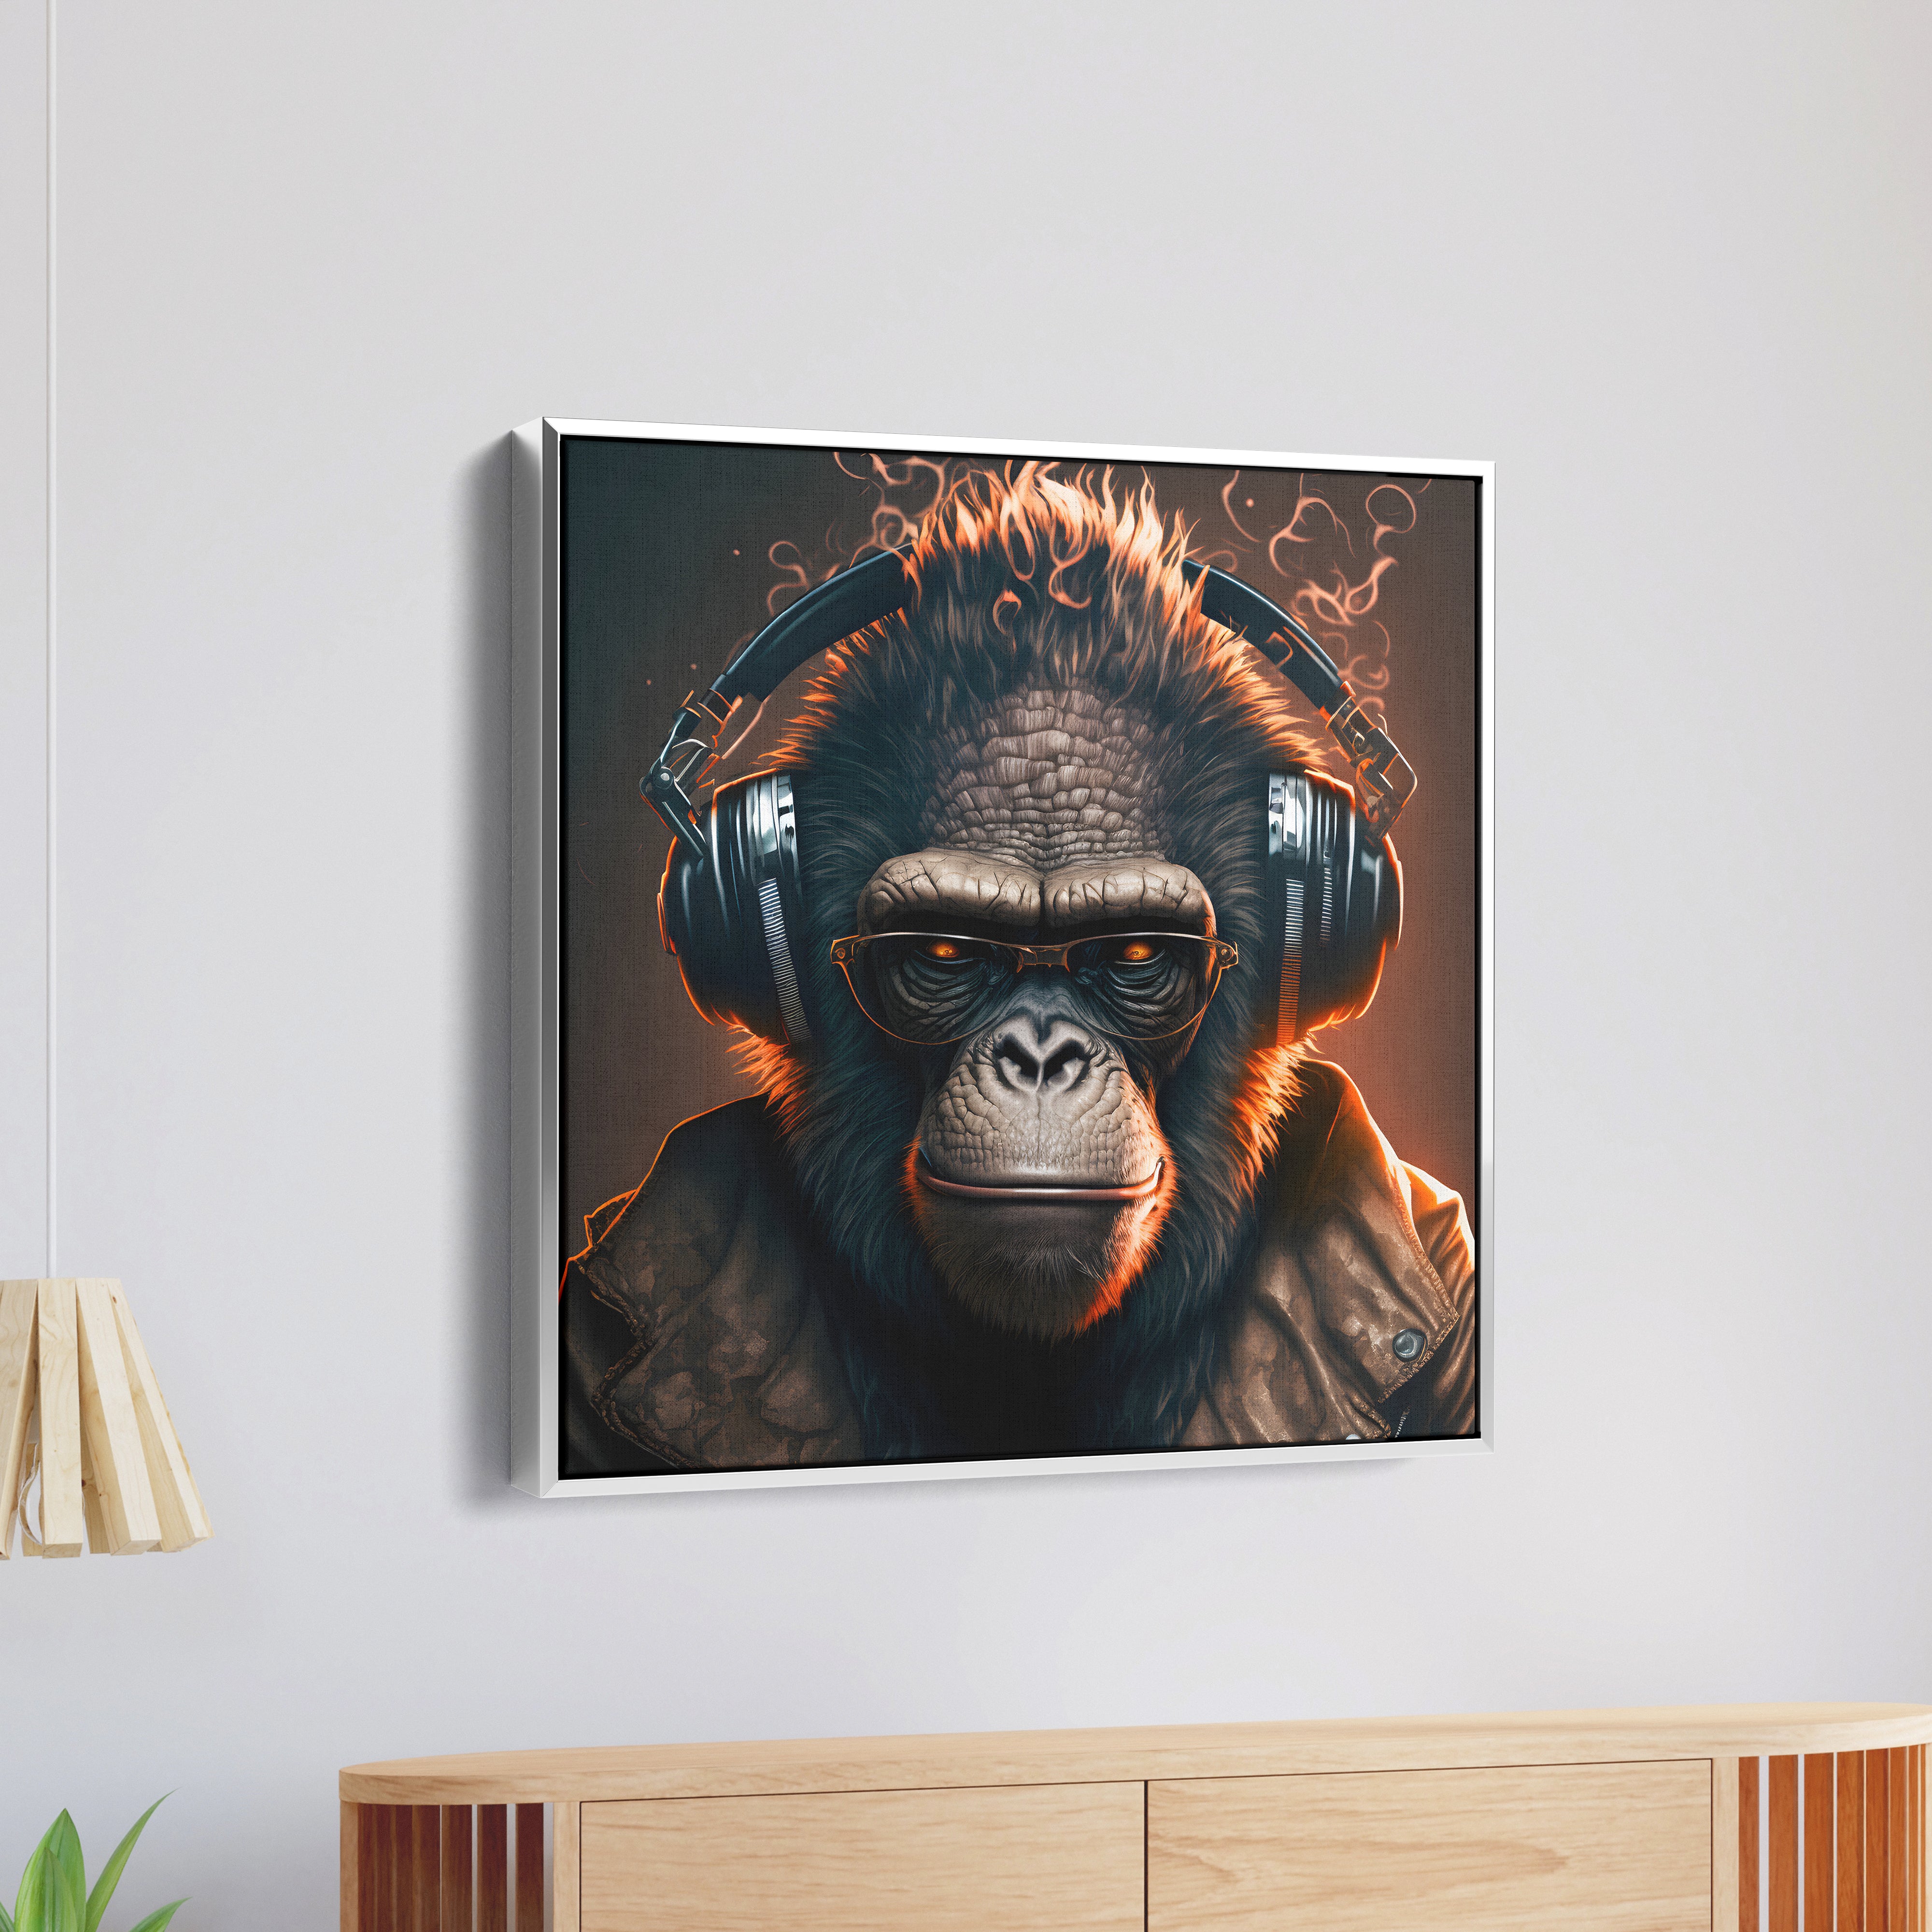 Rock Monkey Wearing Headphone Canvas Wall Painting